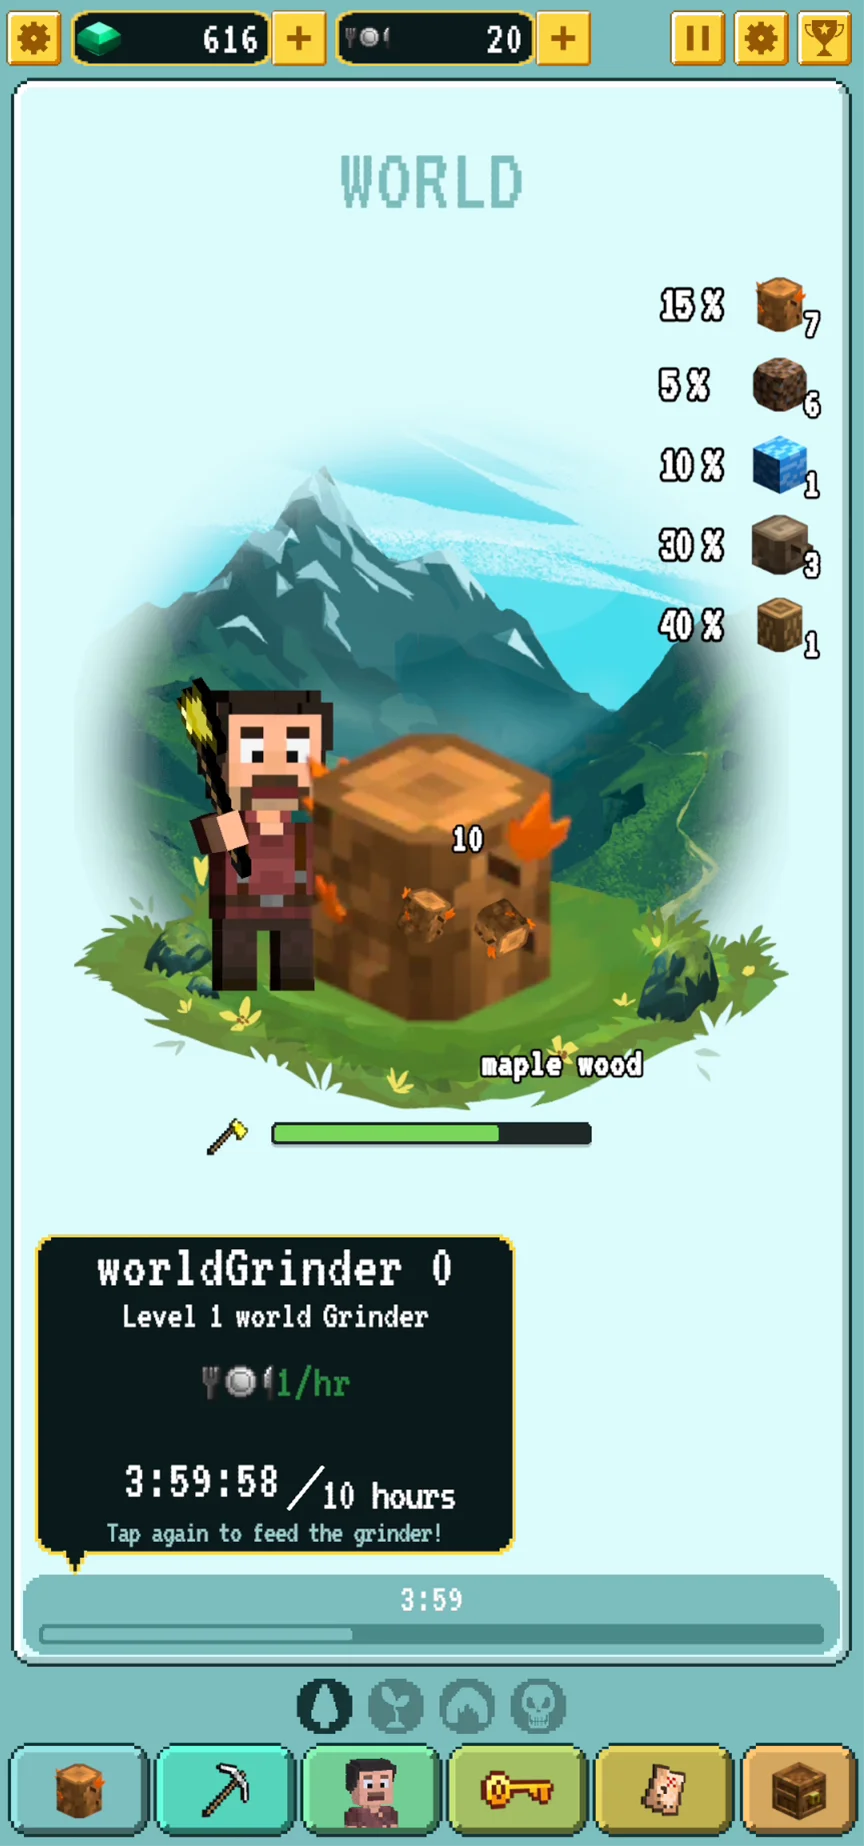 Grindcraft Screenshot of Harvesting Wood